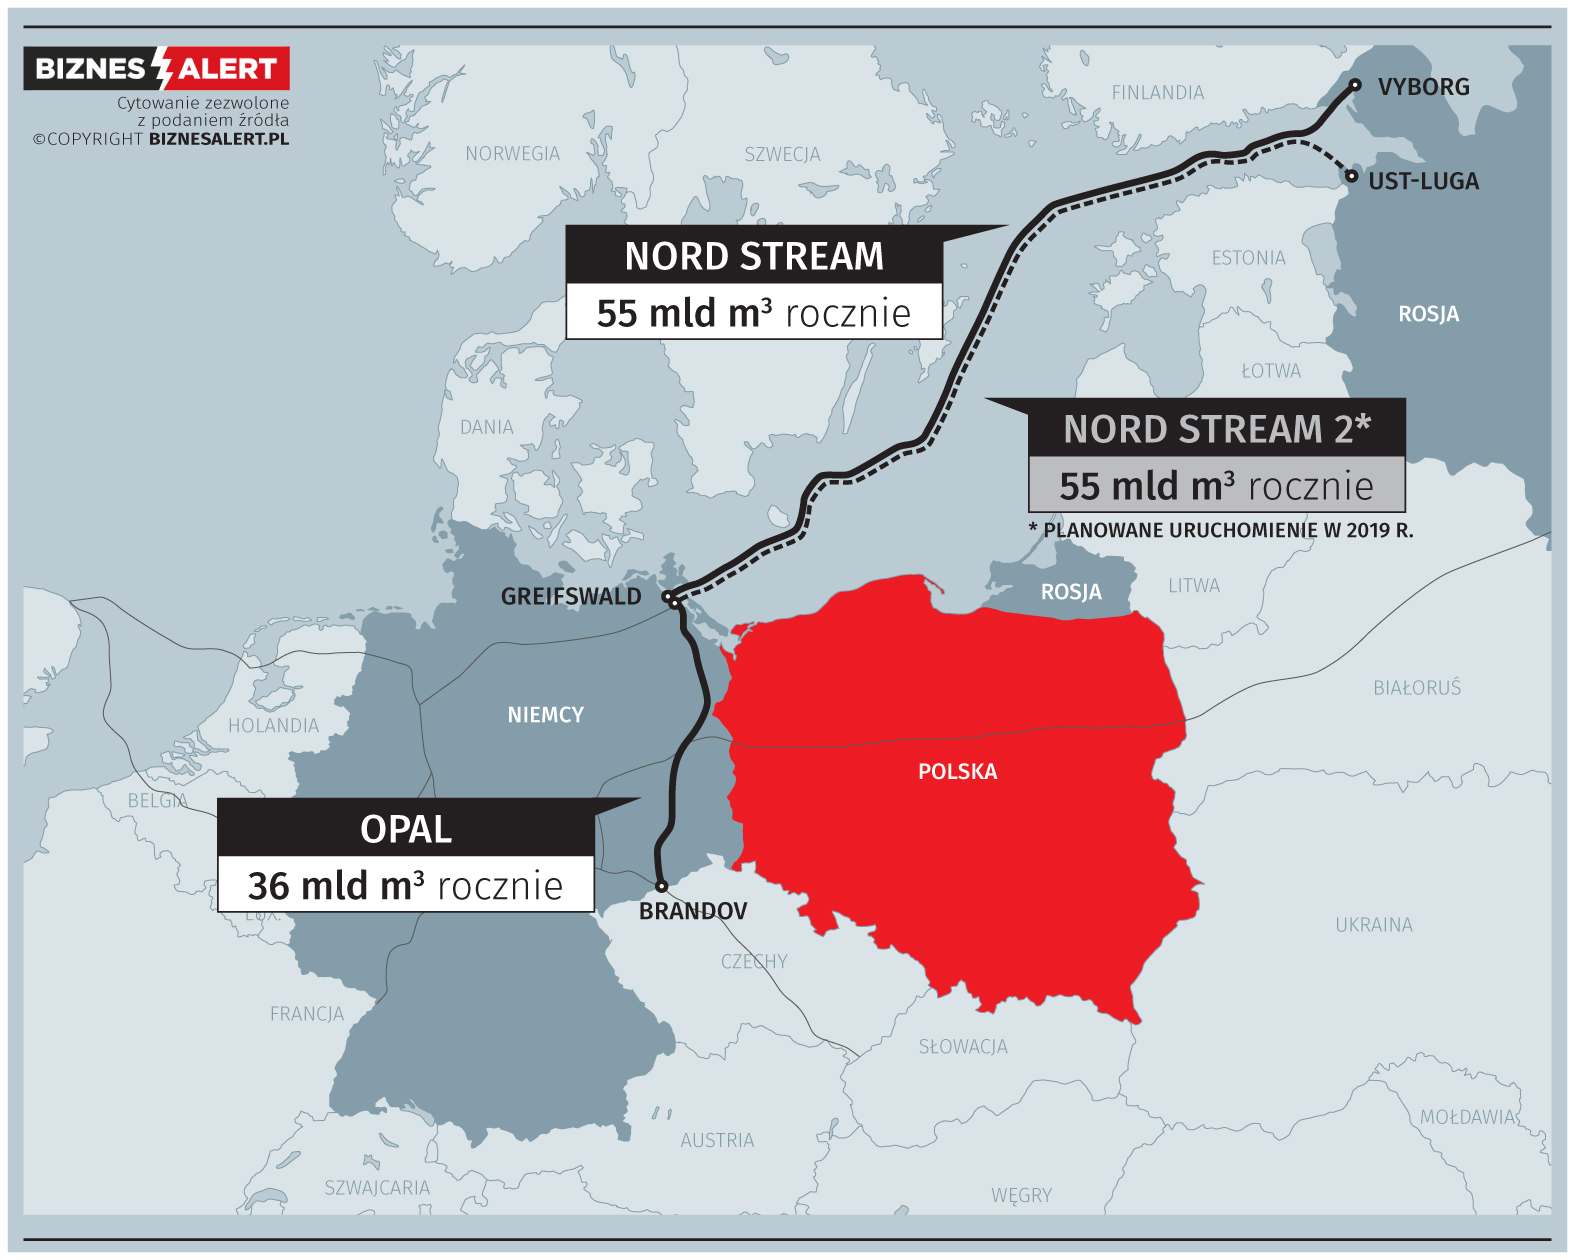 http://biznesalert.com/wp-content/uploads/2017/10/Nord-Stream-i-OPAL-bez-podpis%C3%B3w.jpg